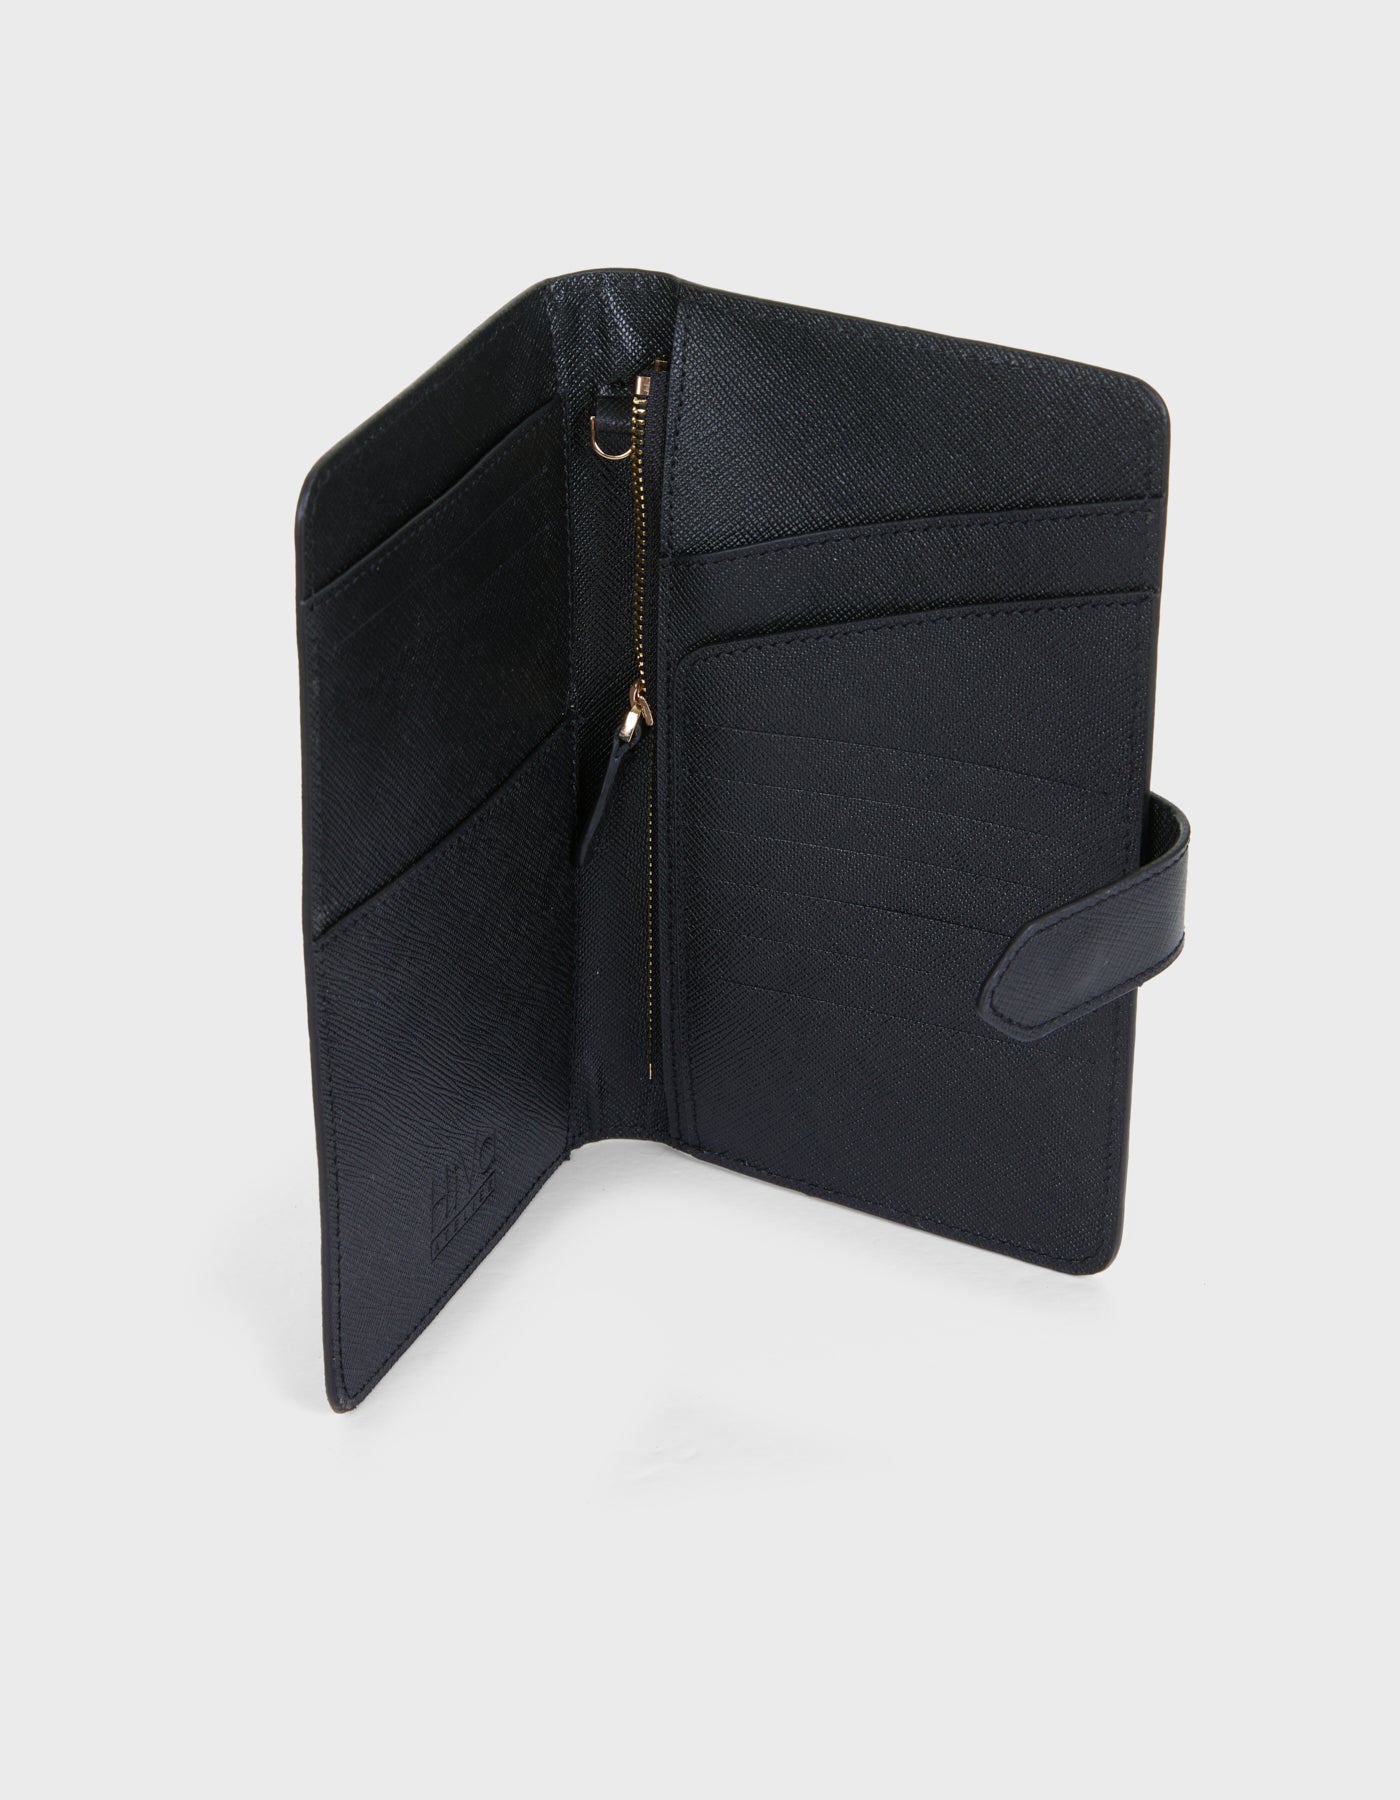 HiVa Atelier - Ita Crossbody Bag and Wallet Black